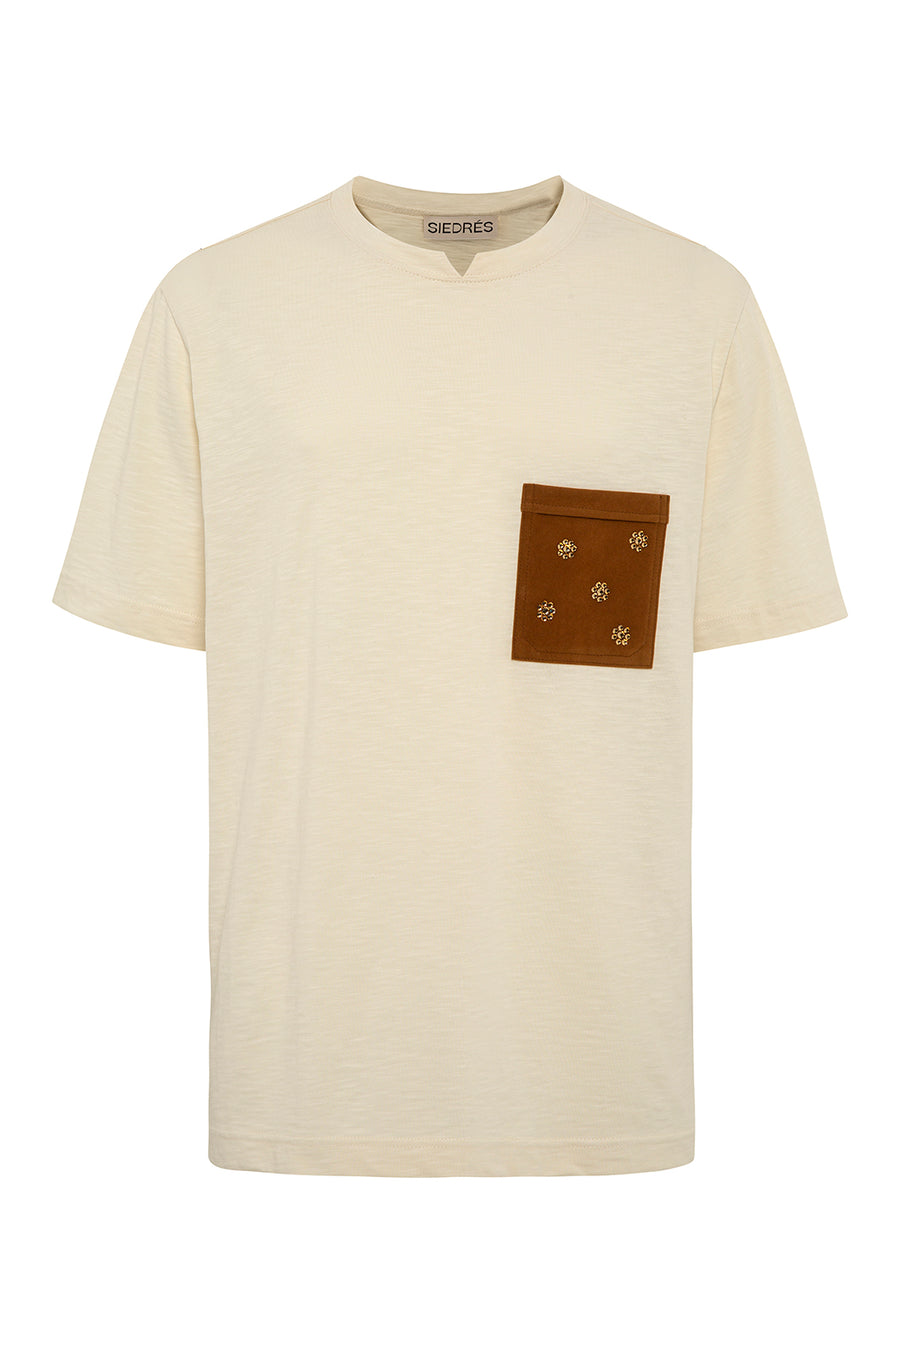 JOEL - Short sleeve t-shirt with rhinestones